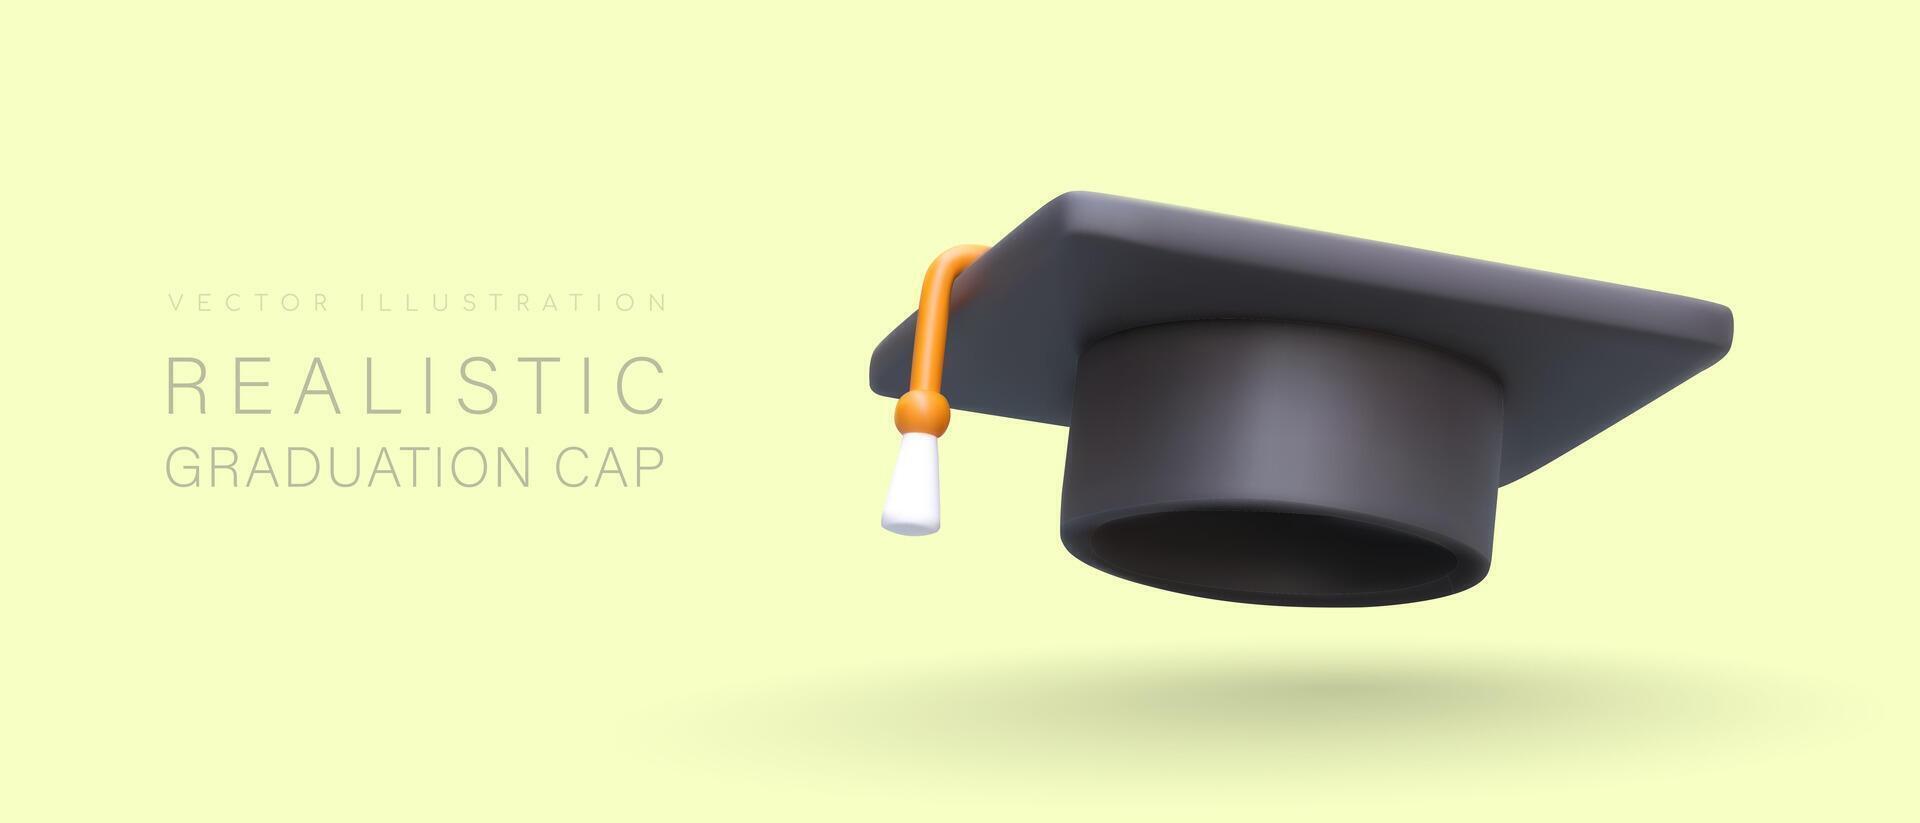 3d realistic academic cap. Poster with graduation cap for online college concept vector